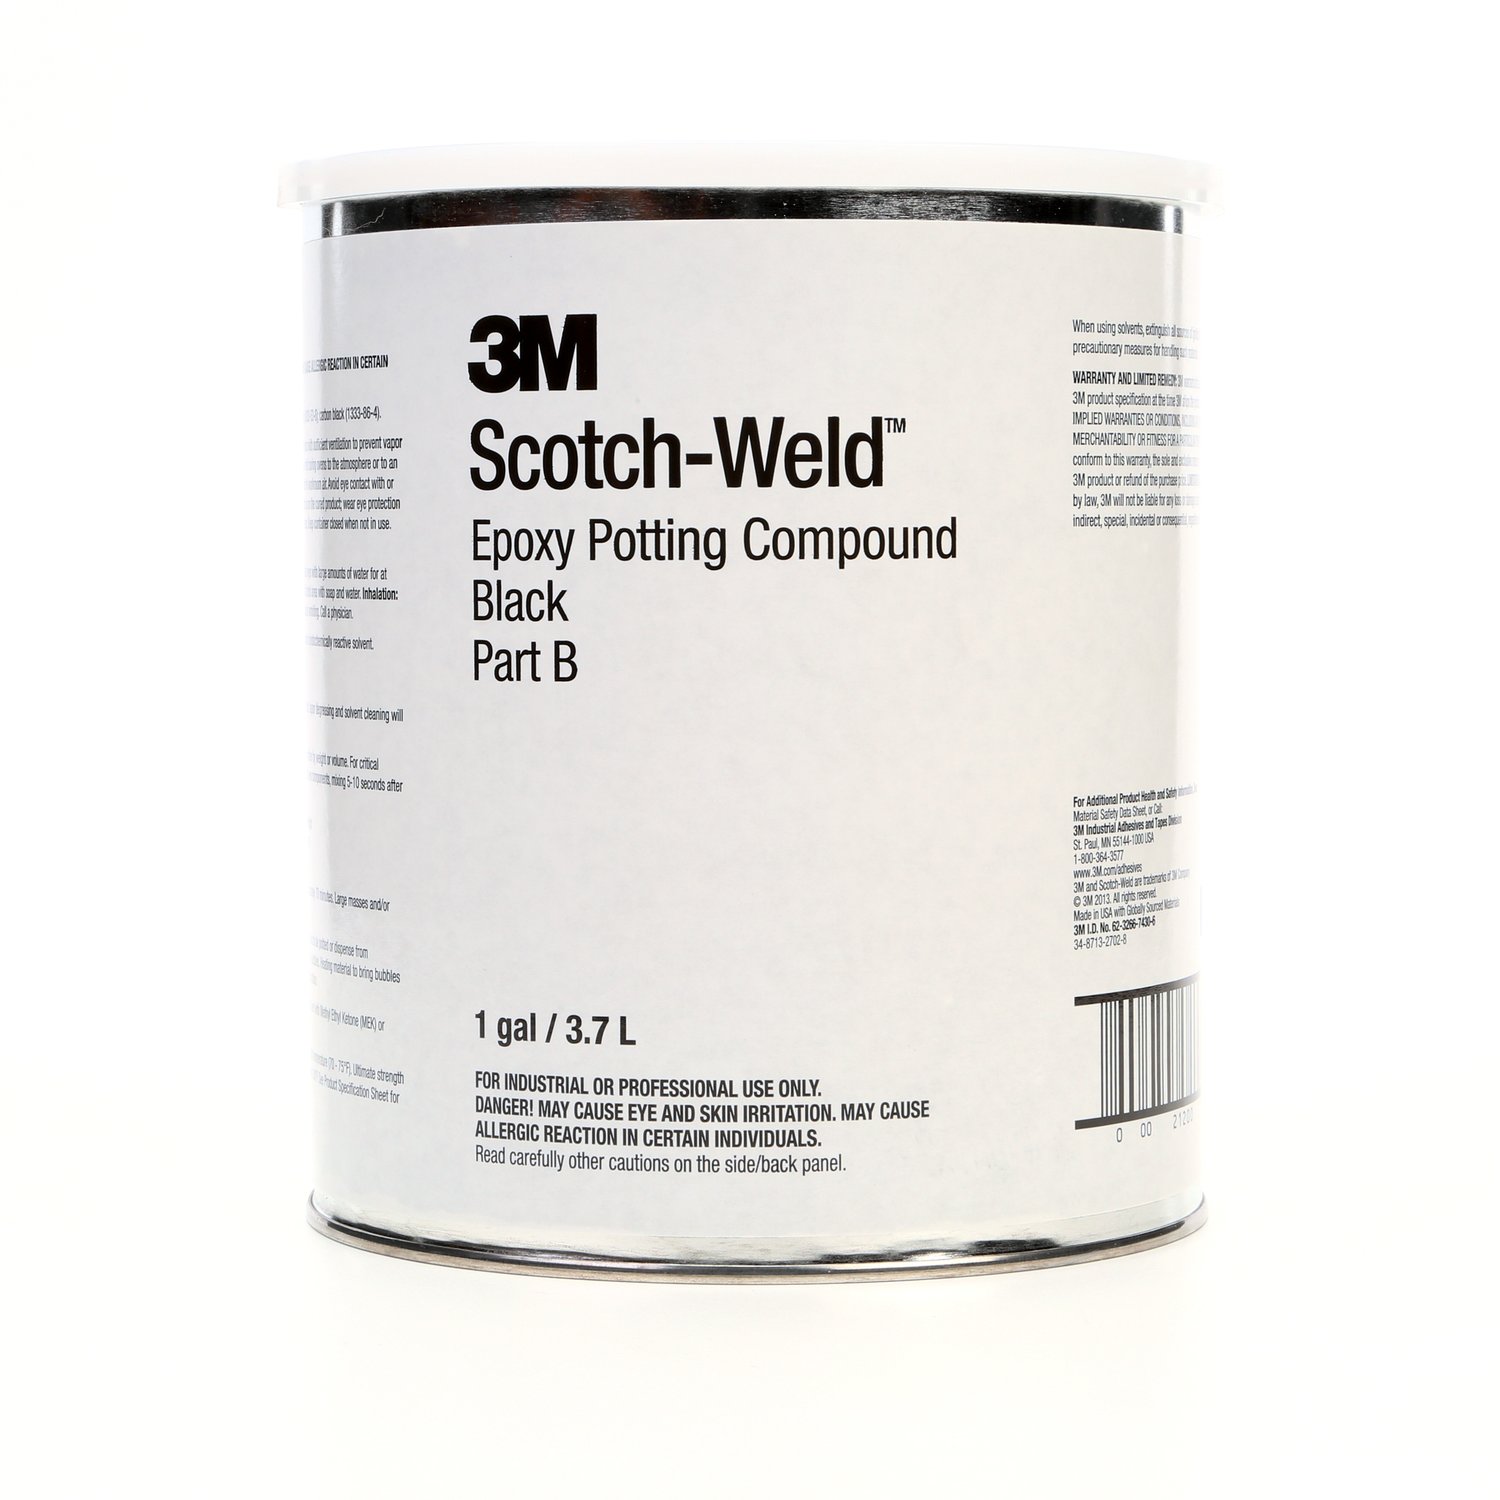 7000121253 - 3M Scotch-Weld Epoxy Potting Compound 270, Black, Part B/A, 1 Gallon, 2 Kit/Case